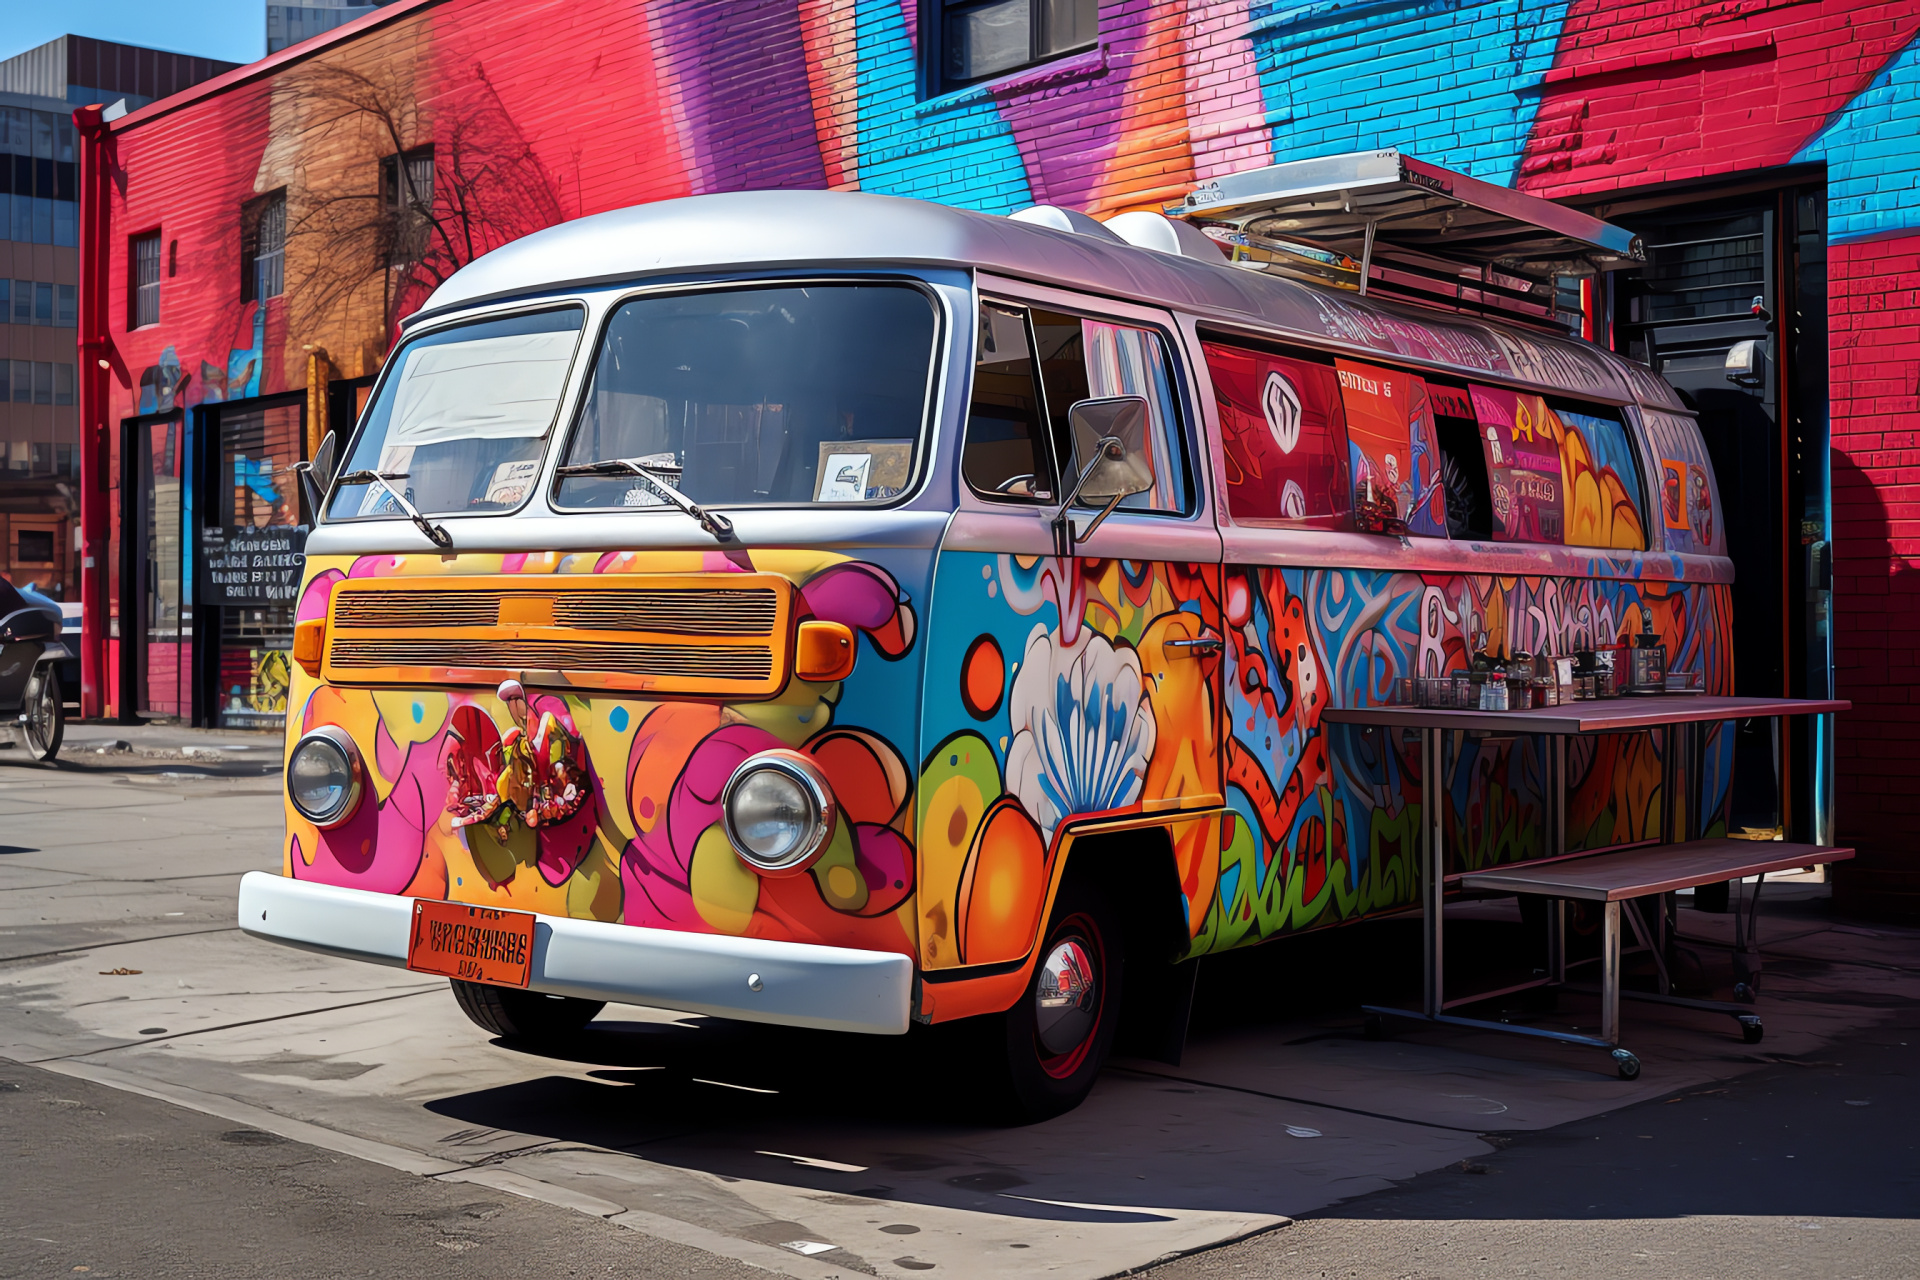 Volkswagen Bus, New York urban scene, Modern food service, Brooklyn backdrop, Cult culture, HD Desktop Image